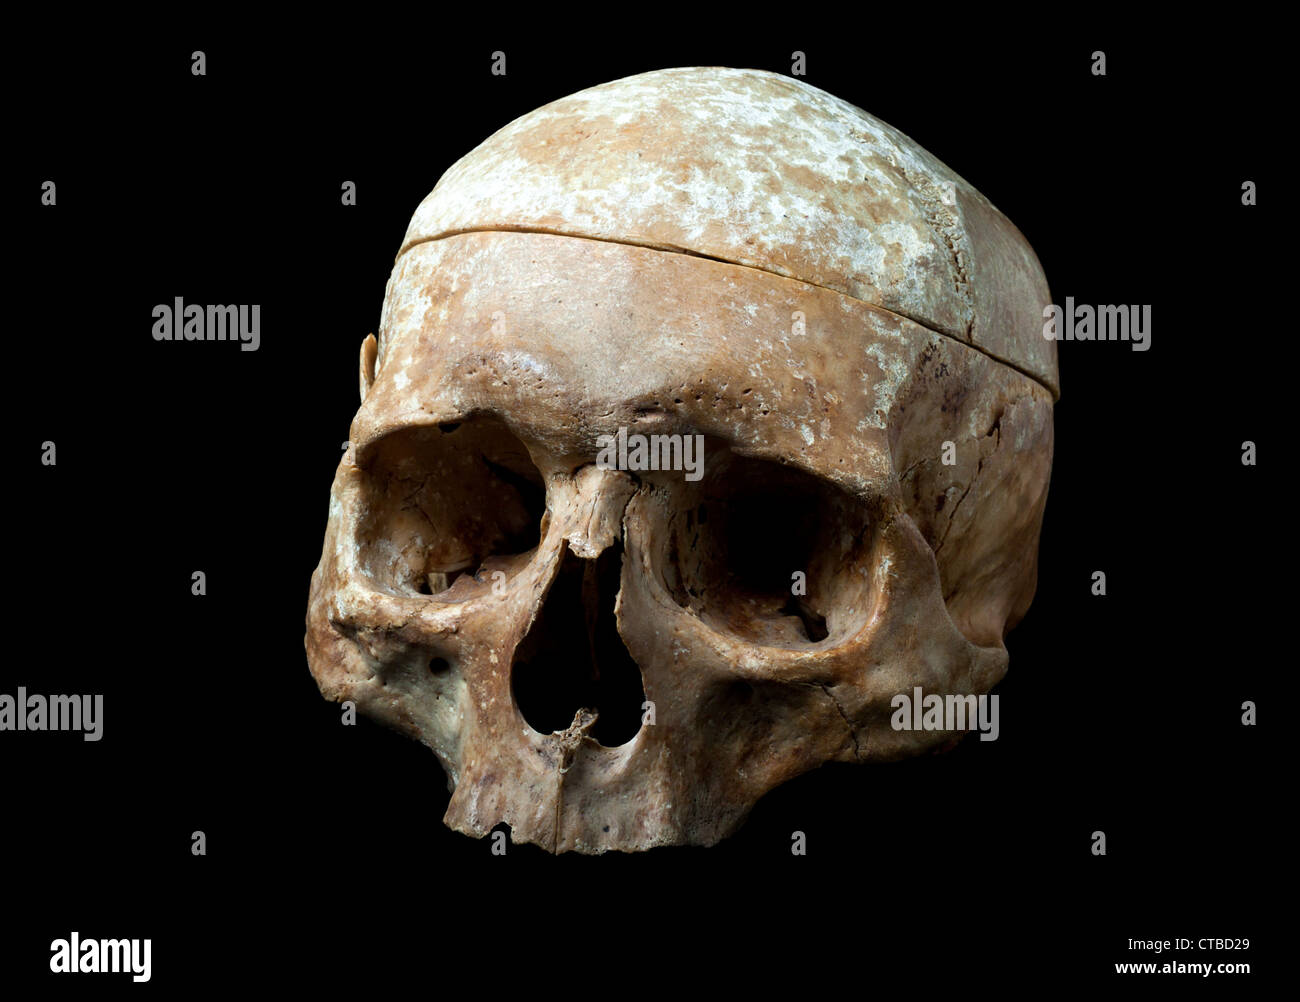 human skull isolated on black background Stock Photo